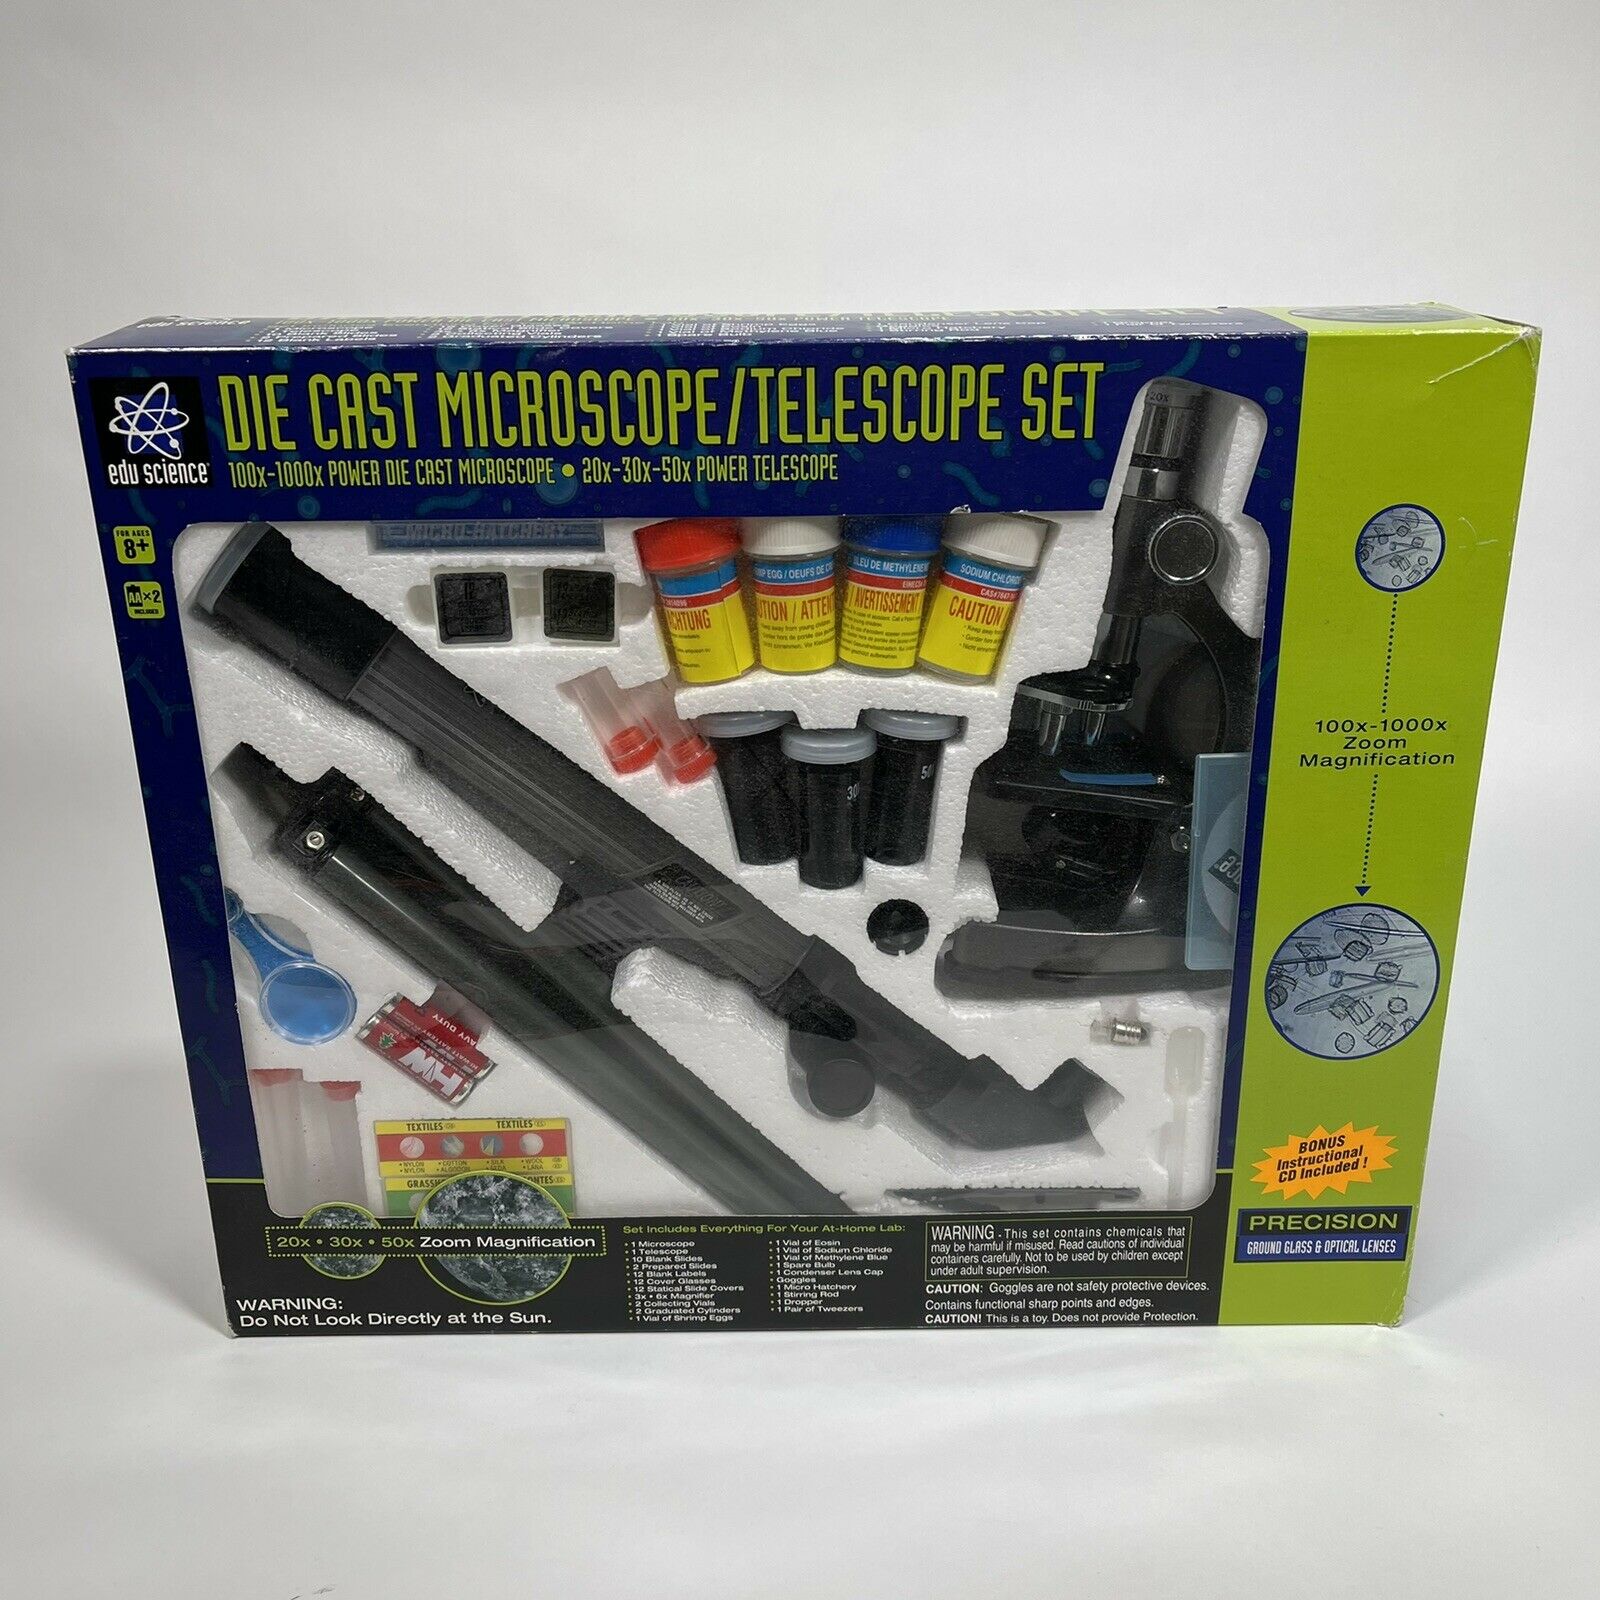 1999 Edu Science Die Cast Microscope Telescope Set - Open Box - 100% Complete!